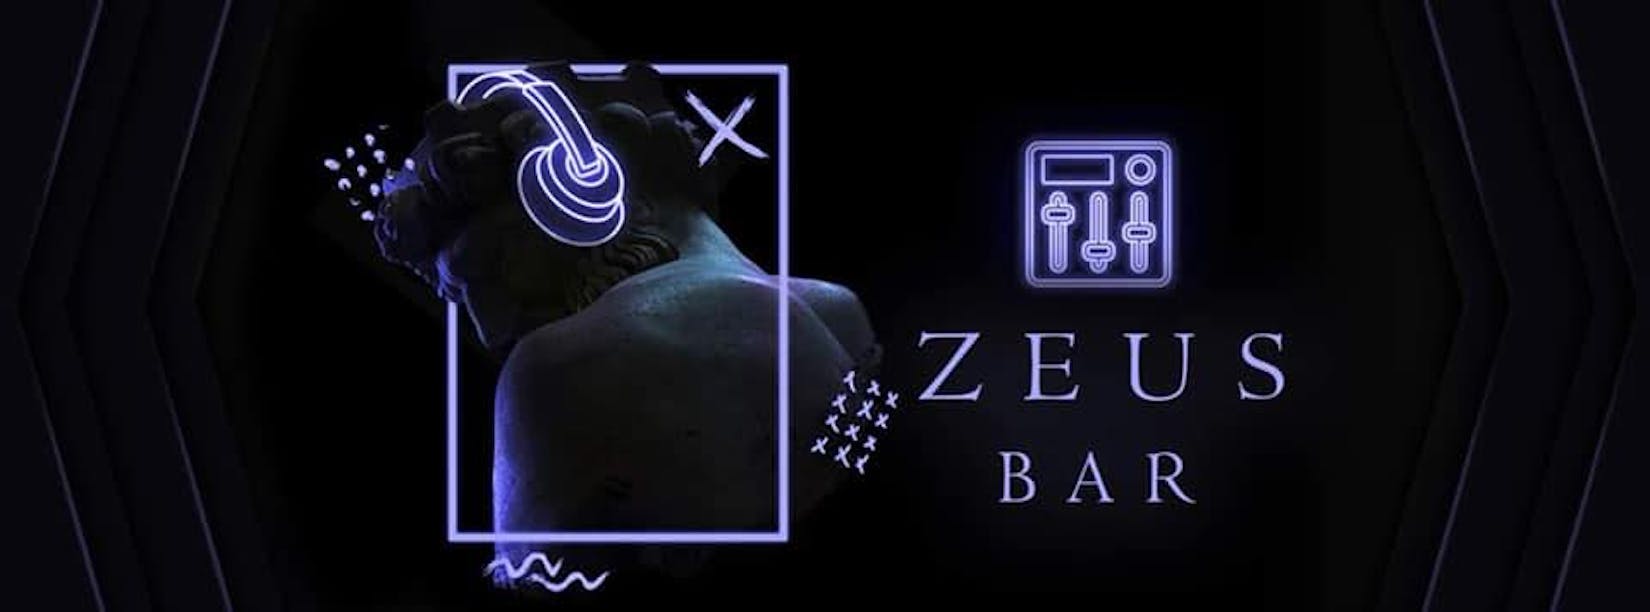 Zeus Bar | yathar